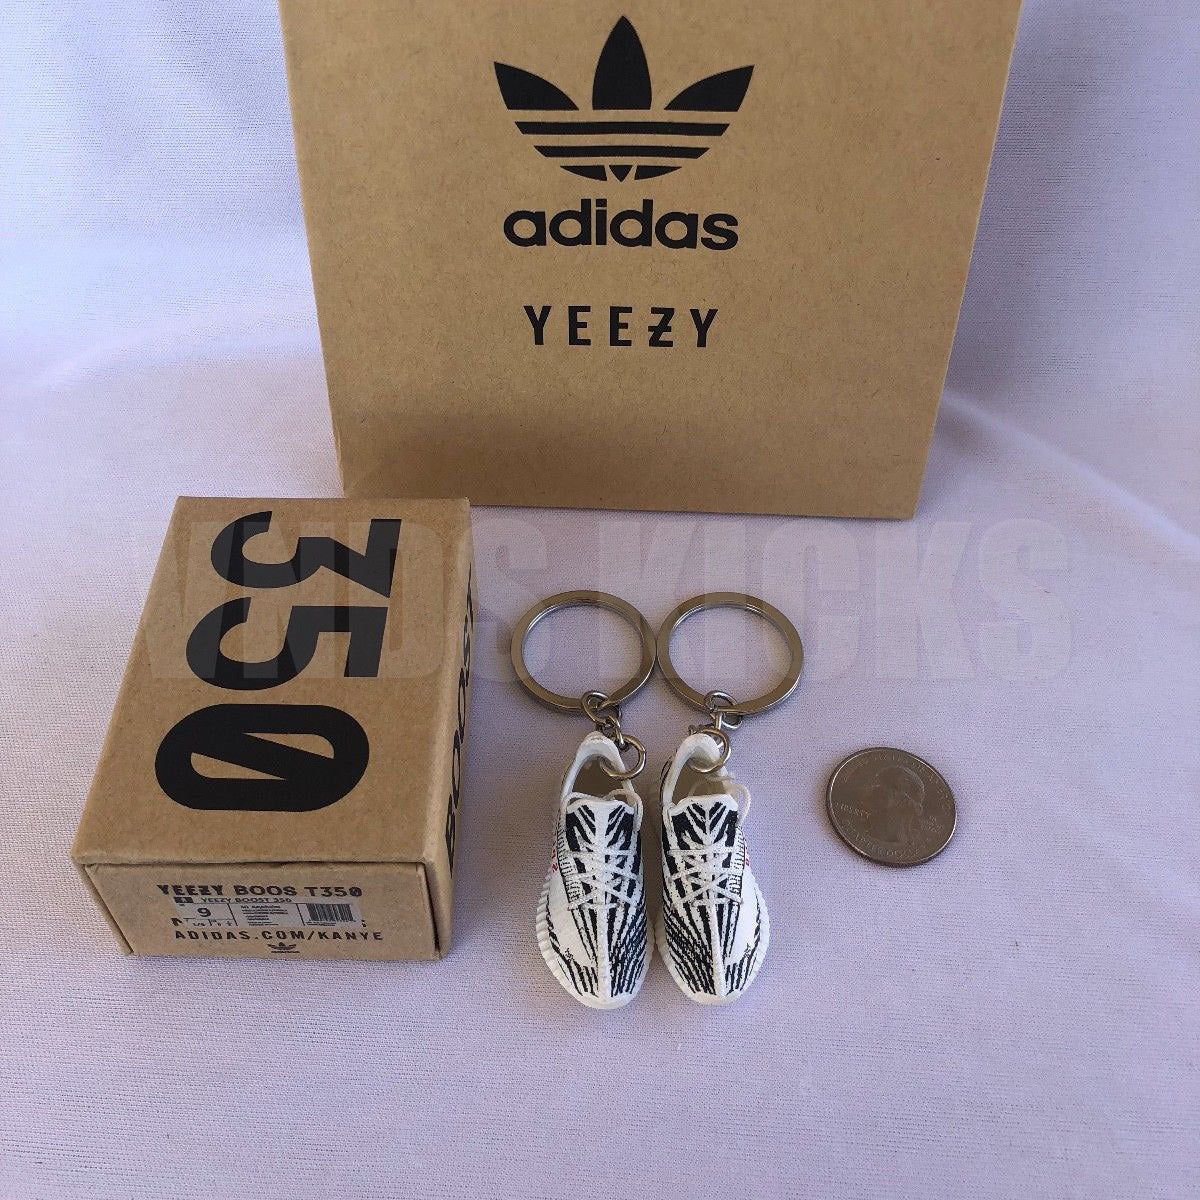 Yeezy 350 Boost "Zebra"  - Sneakers 3D Keychain